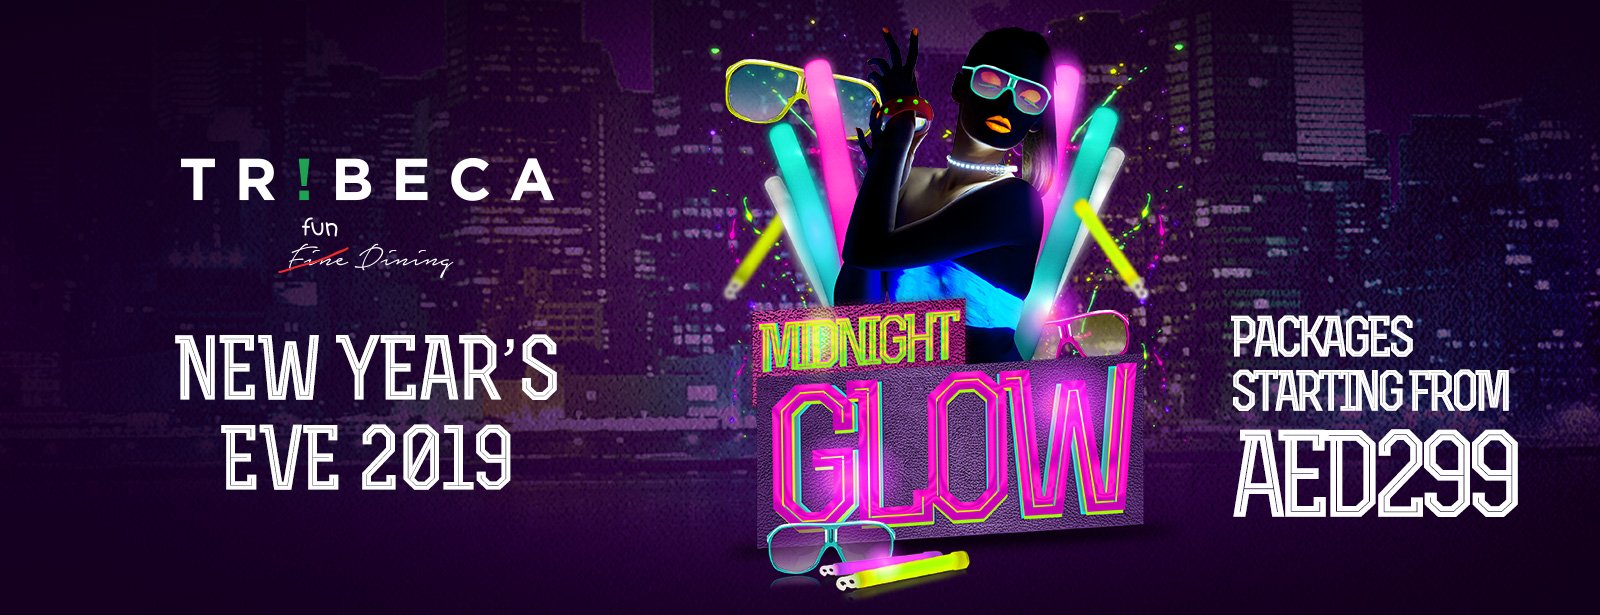 Midnight Glow – NYE 2019 at Tribeca JBR - Coming Soon in UAE